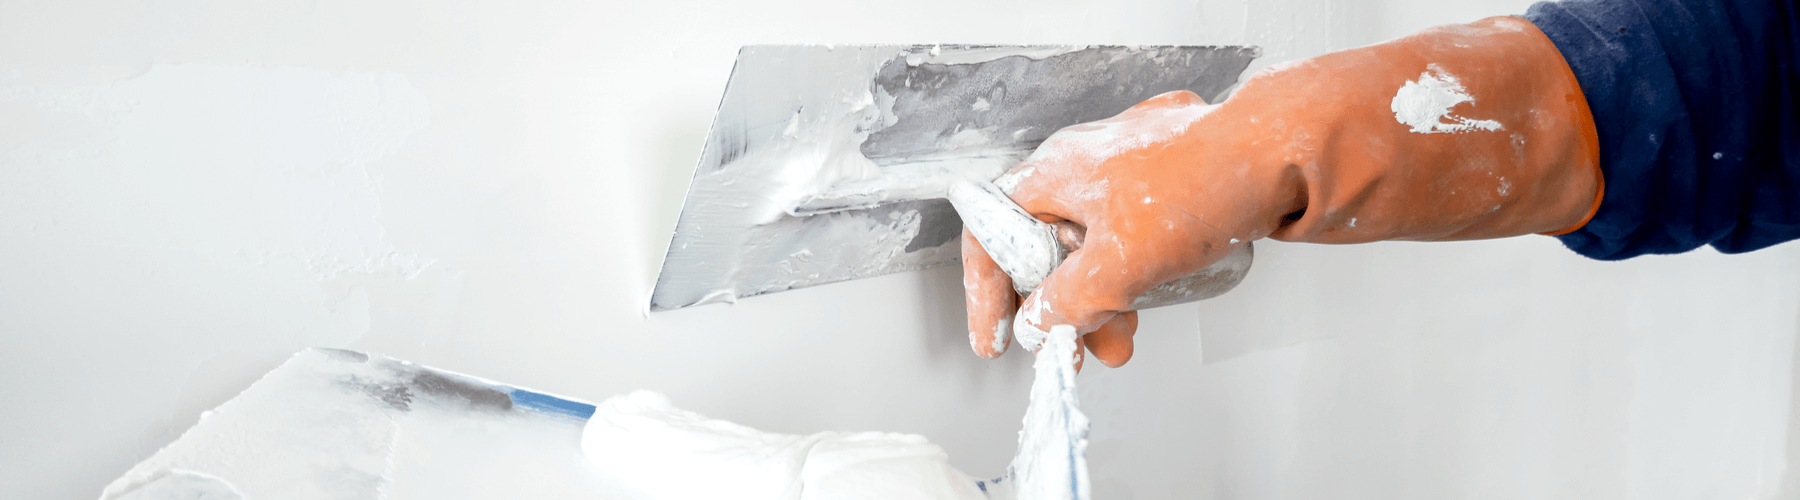 how to identify asbestos plaster